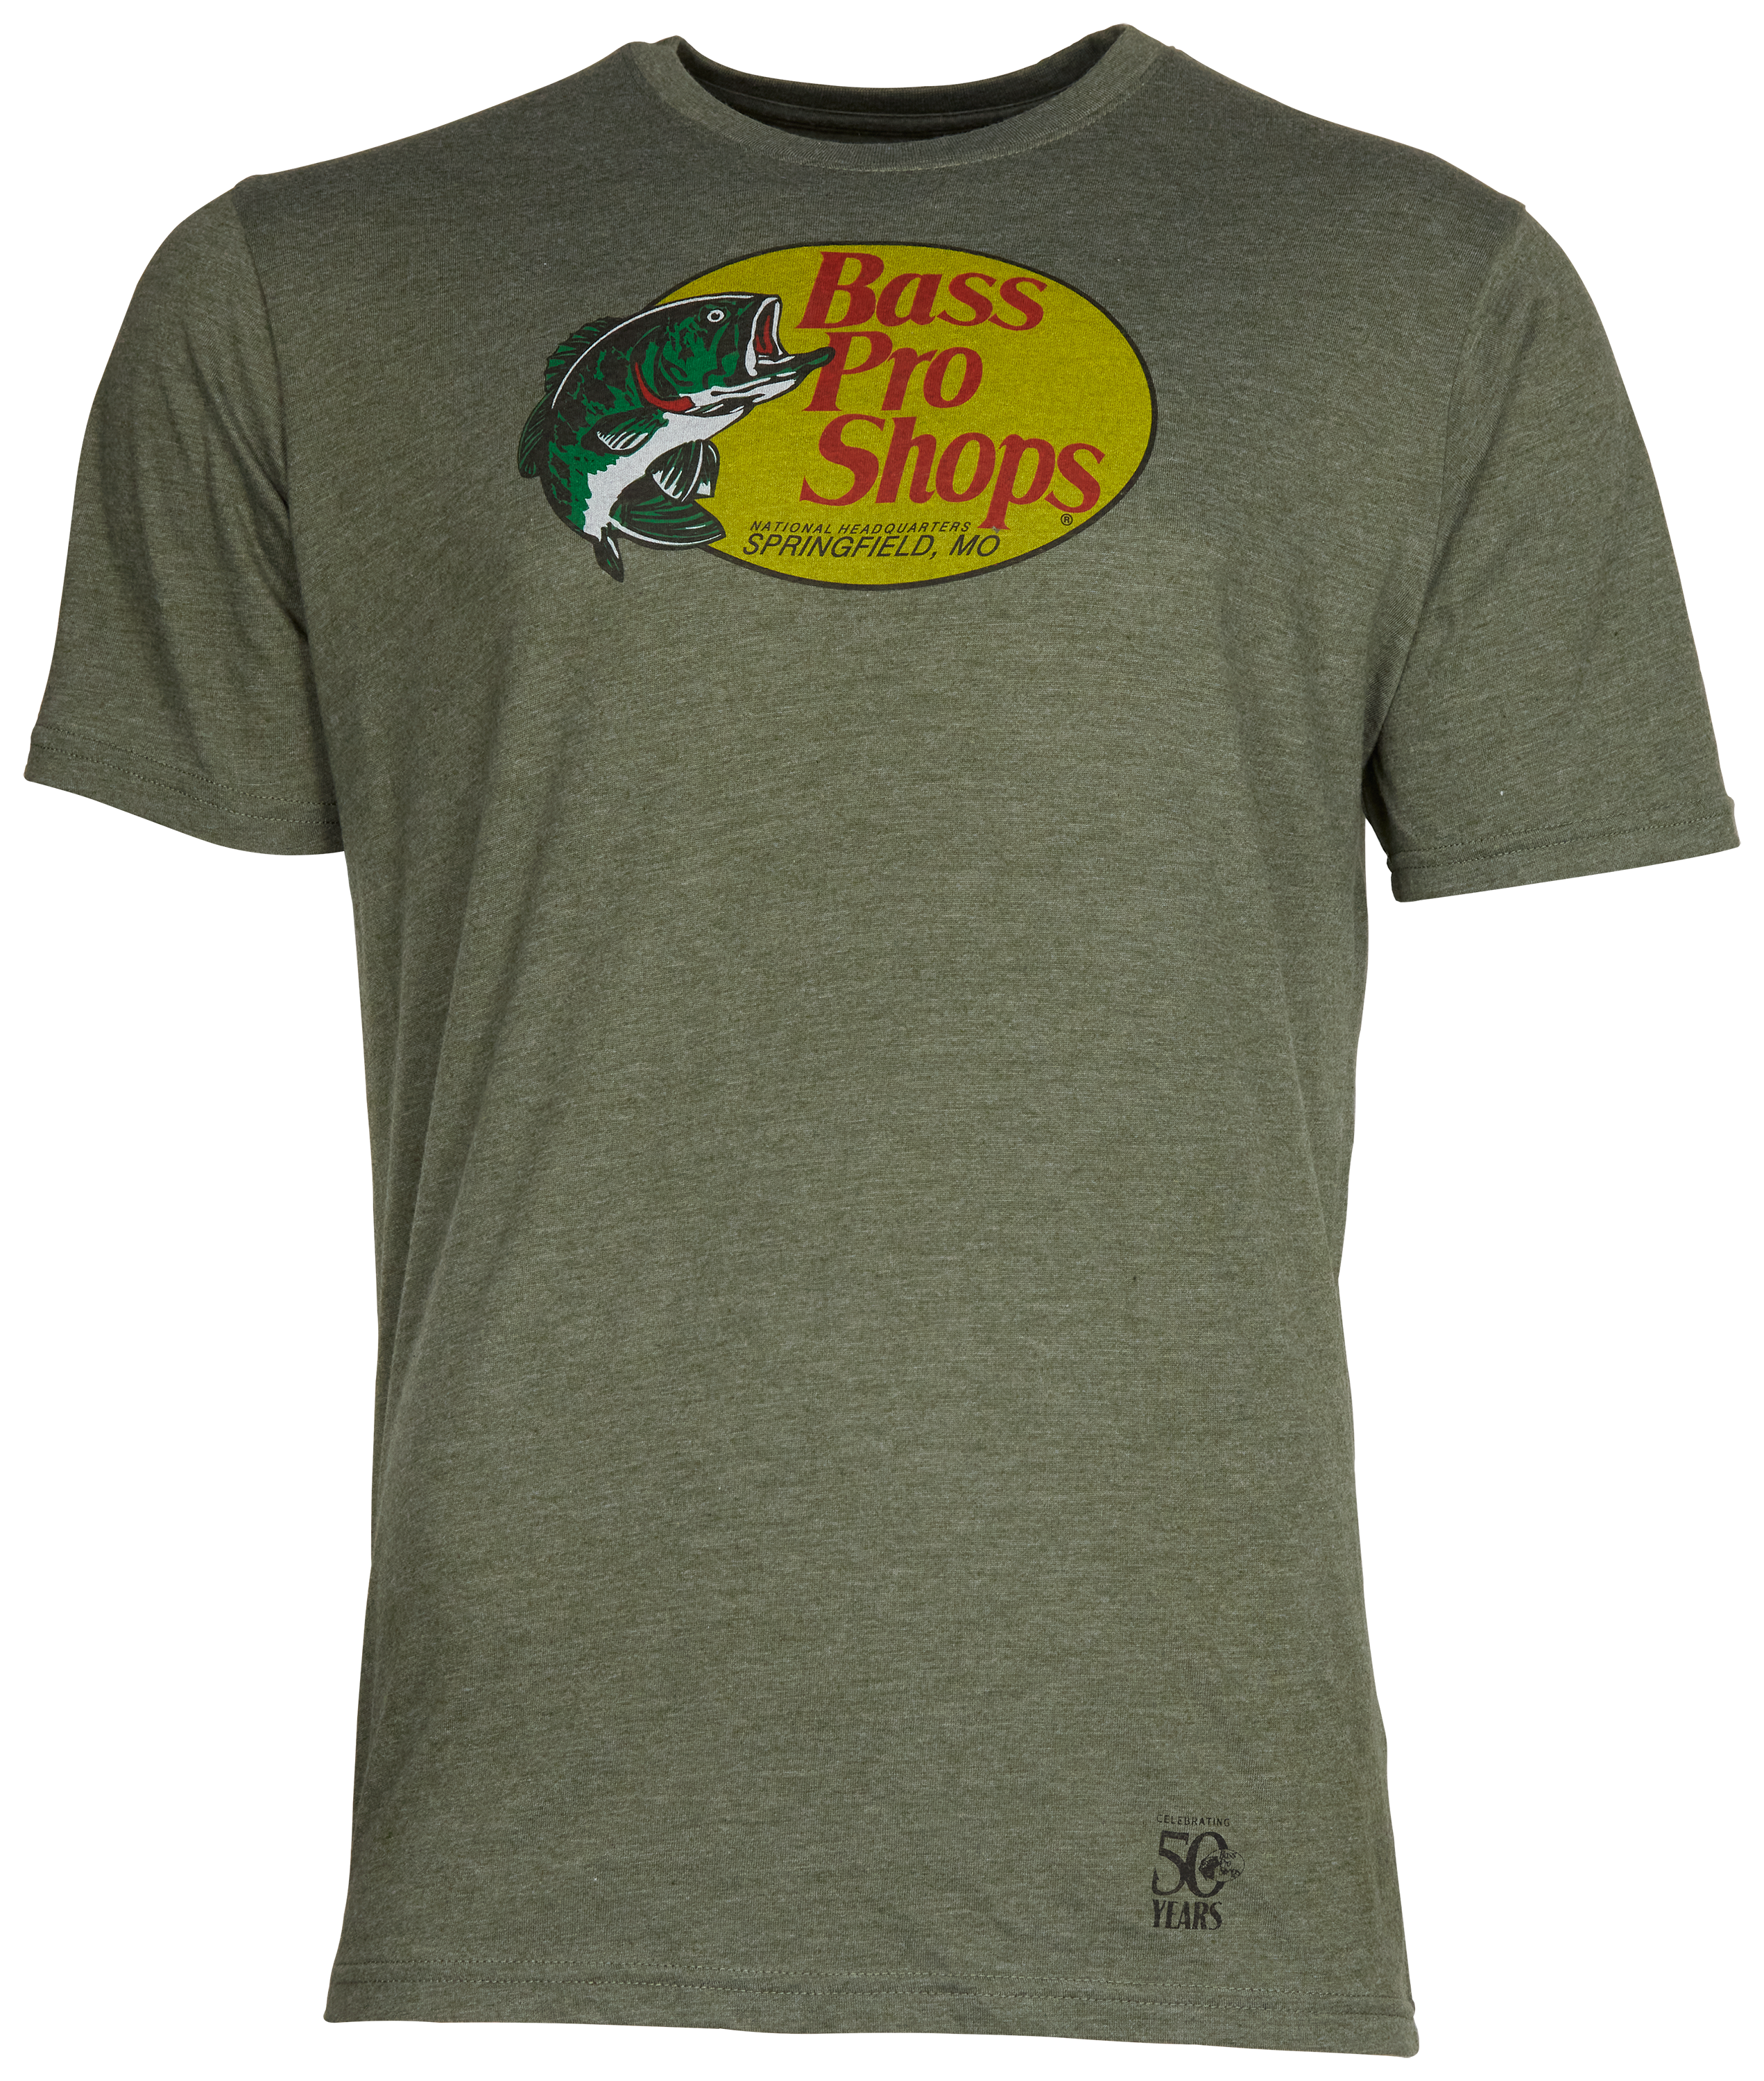 Bass Pro Shops 50th Anniversary Vintage Woodcut Short-Sleeve T-Shirt for Men